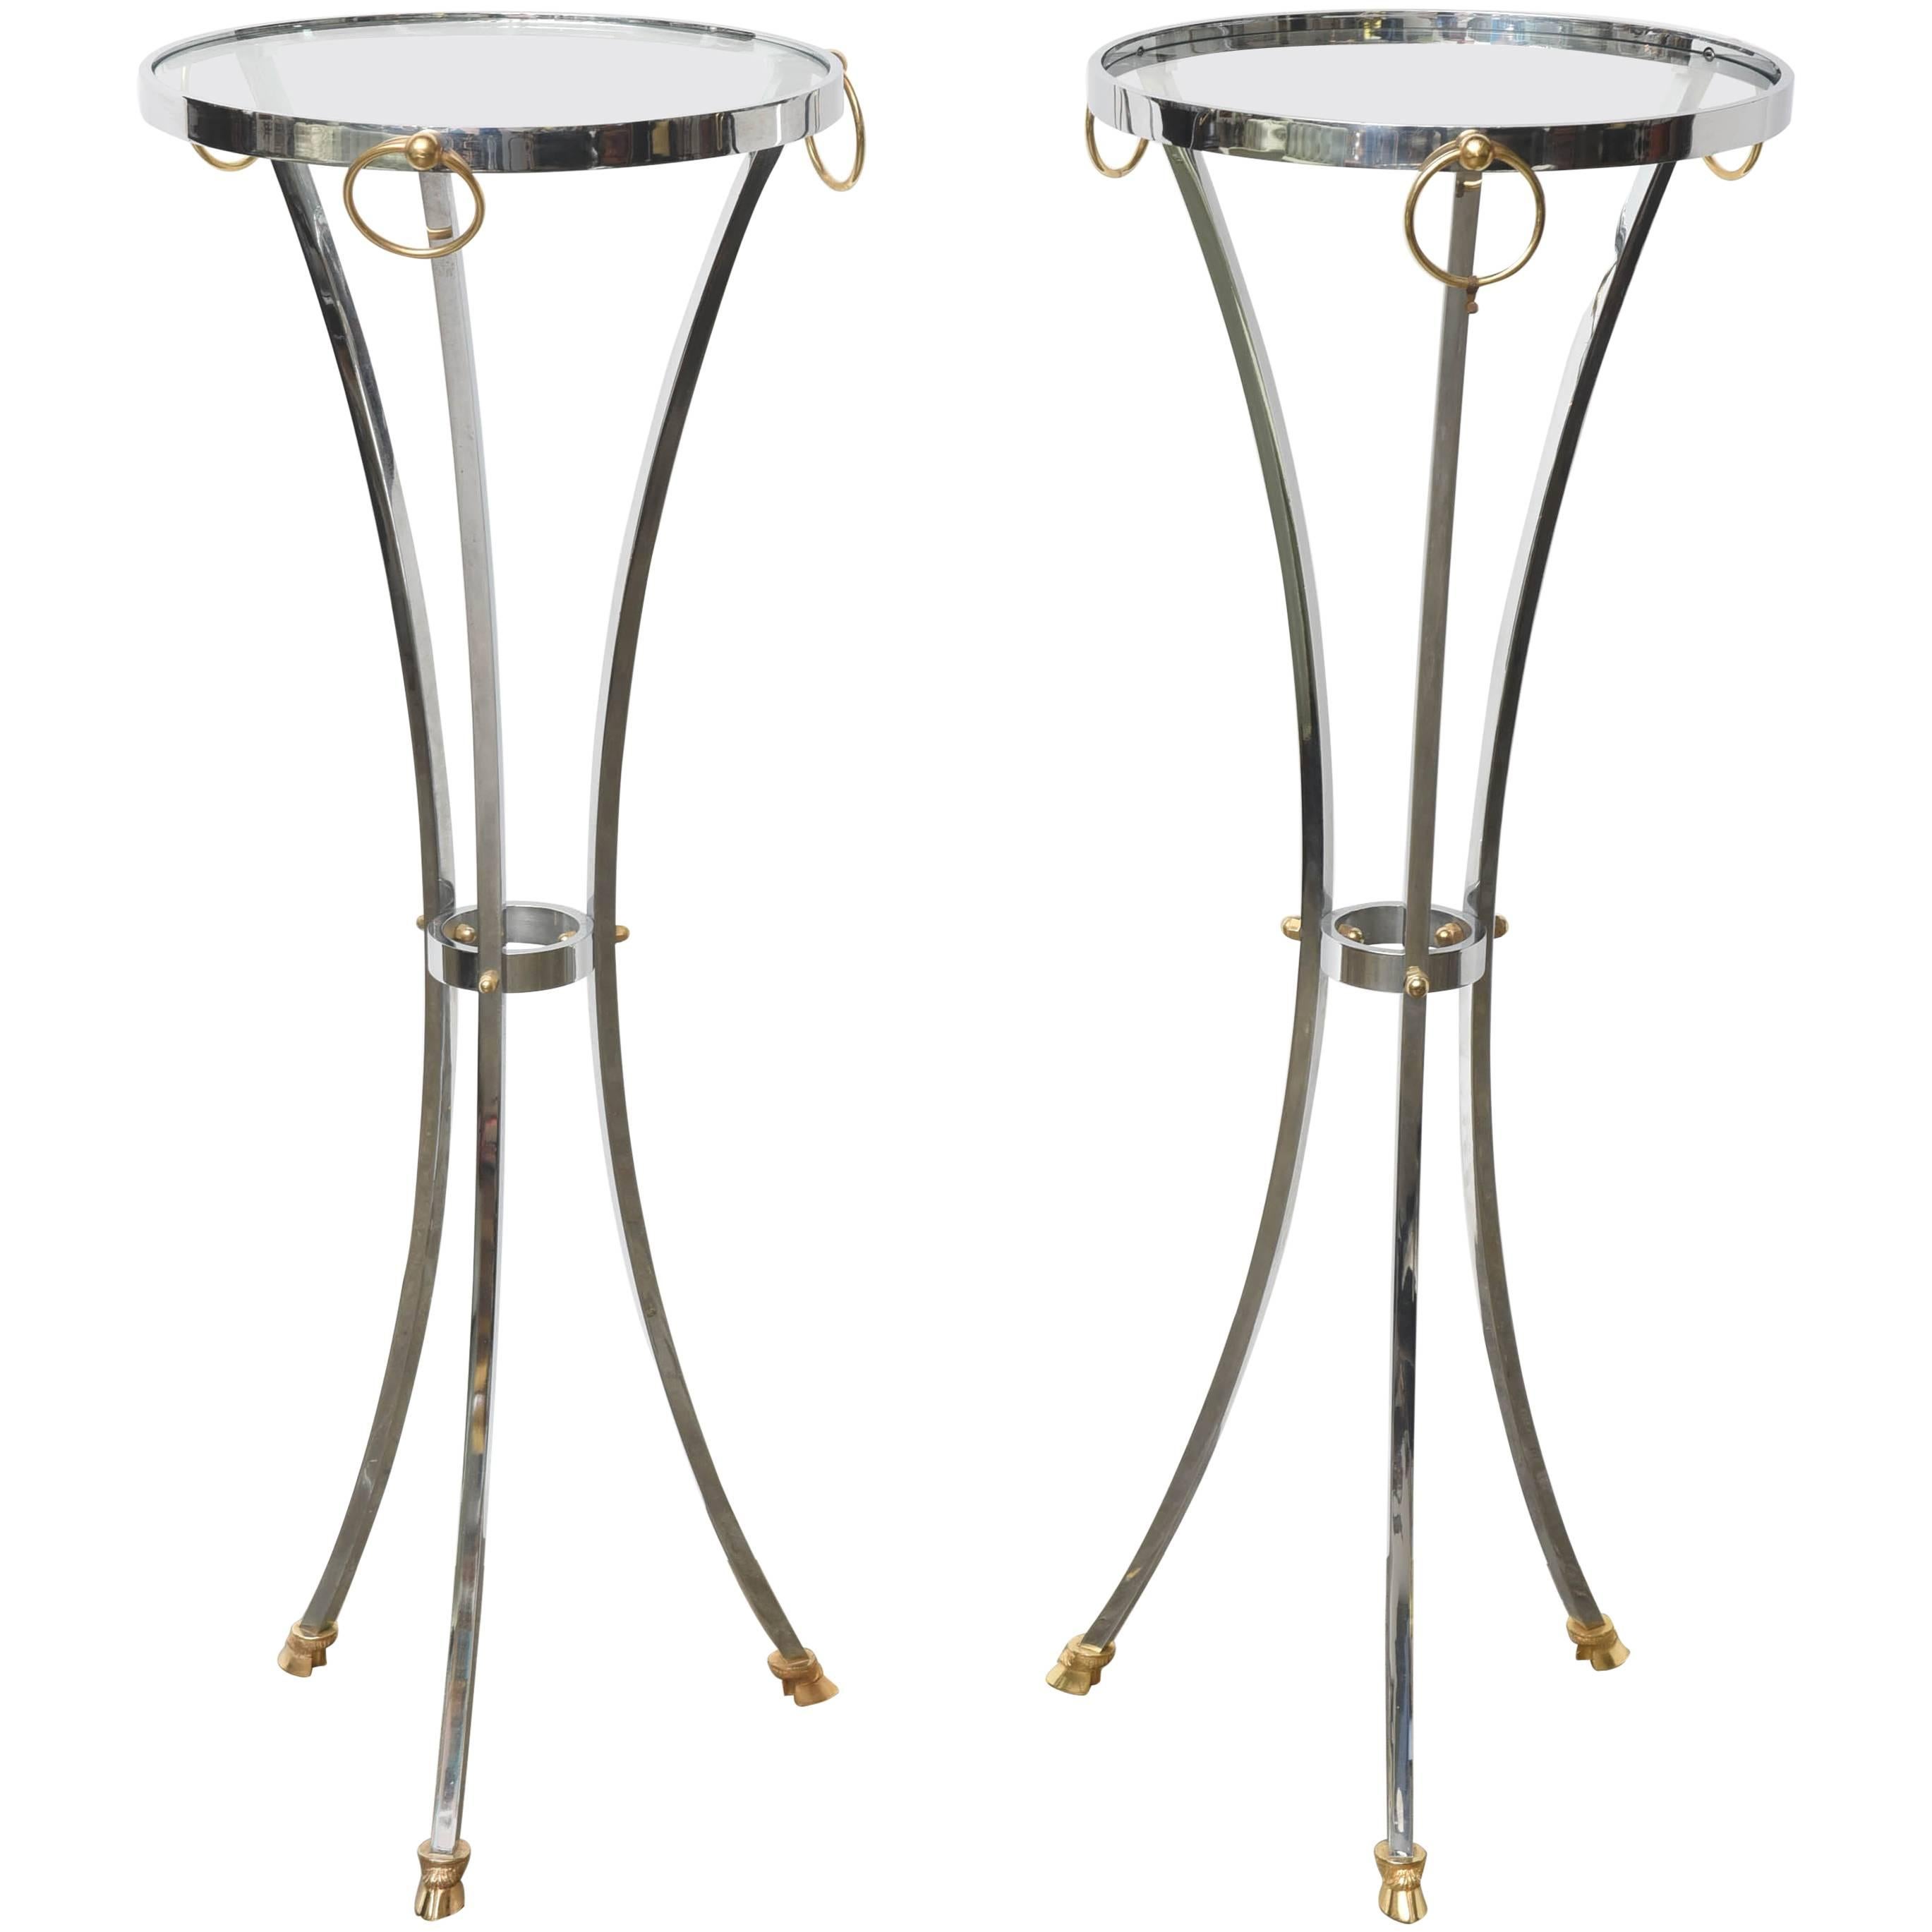 Pair of Chrome & Brass Pedestals by Maison Jansen